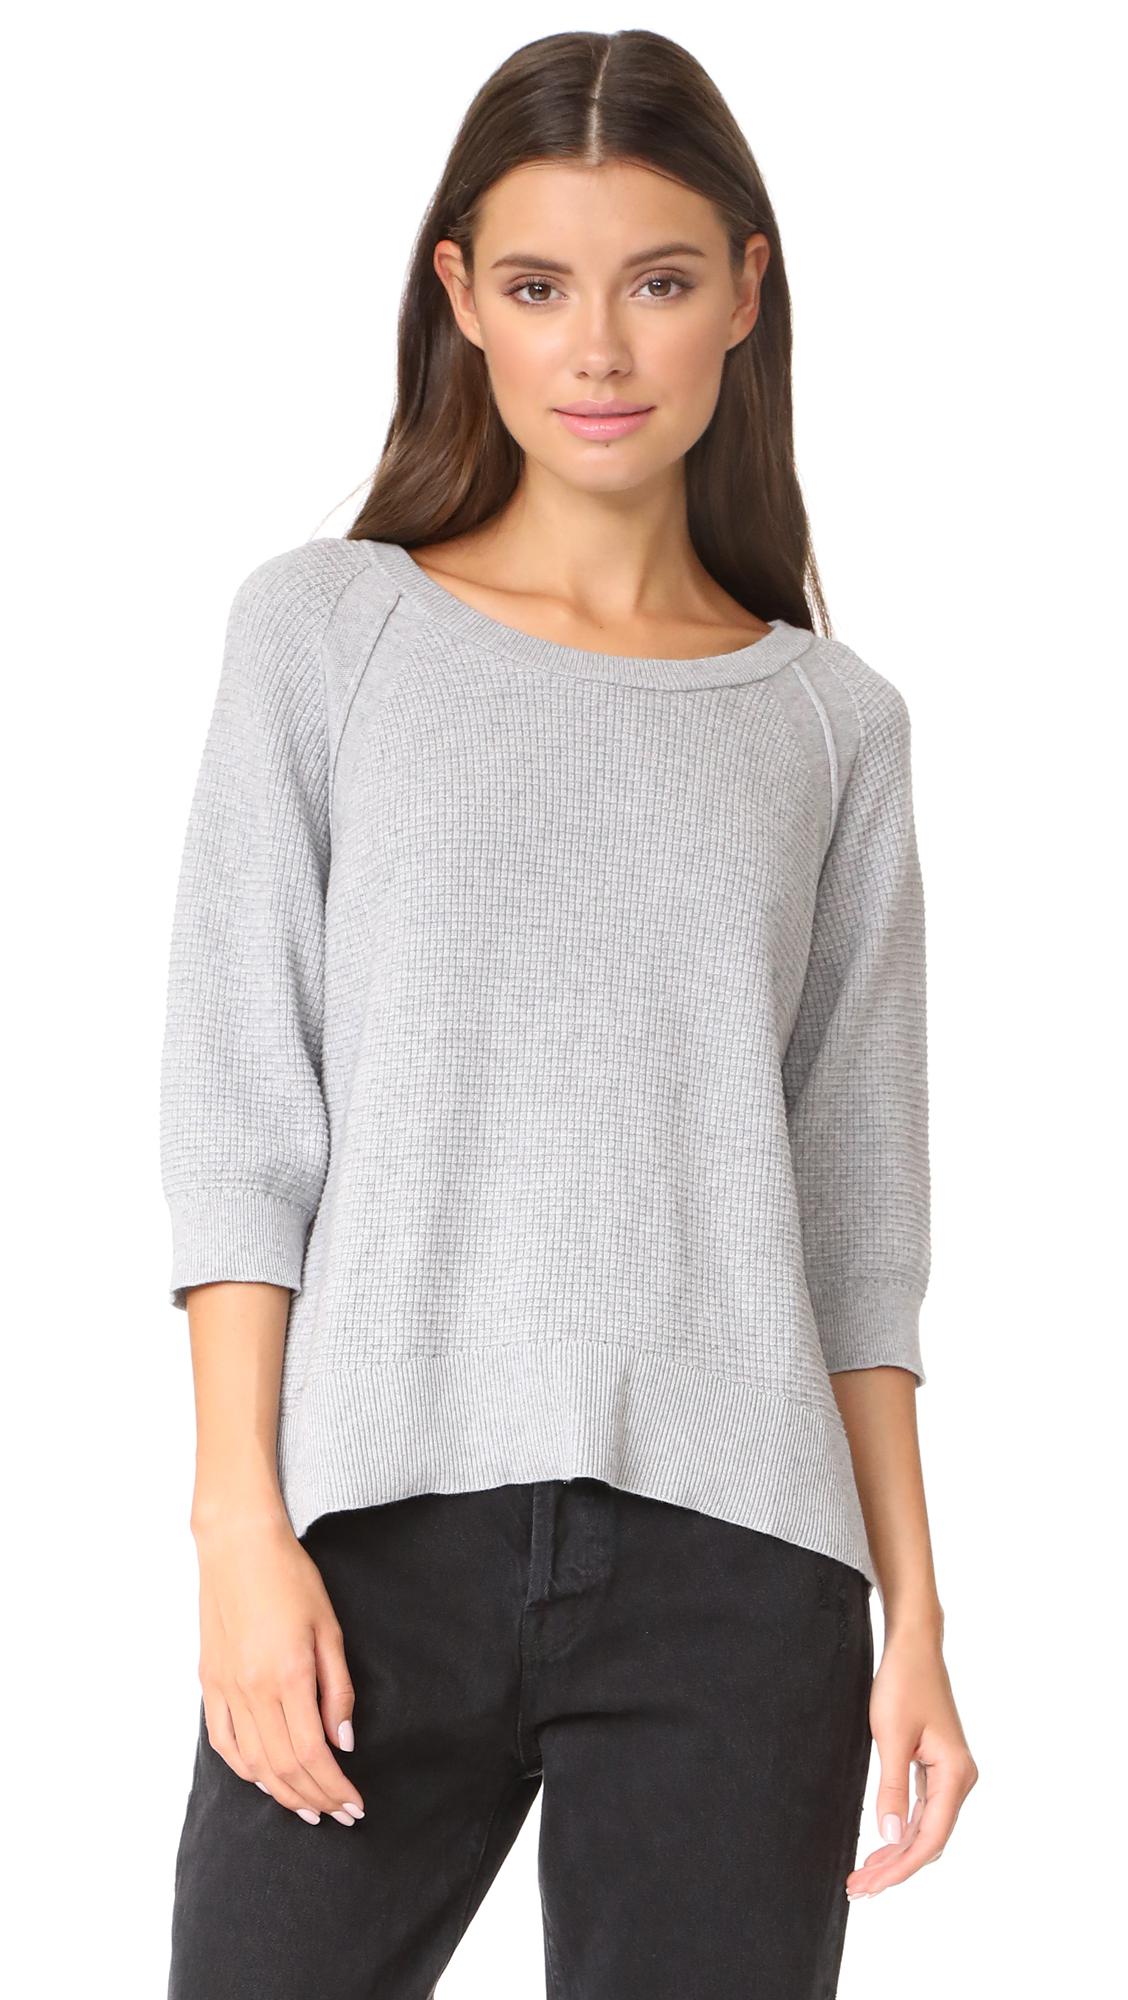 Lyst - Wilt Shrunken Thermal Sweater in Gray